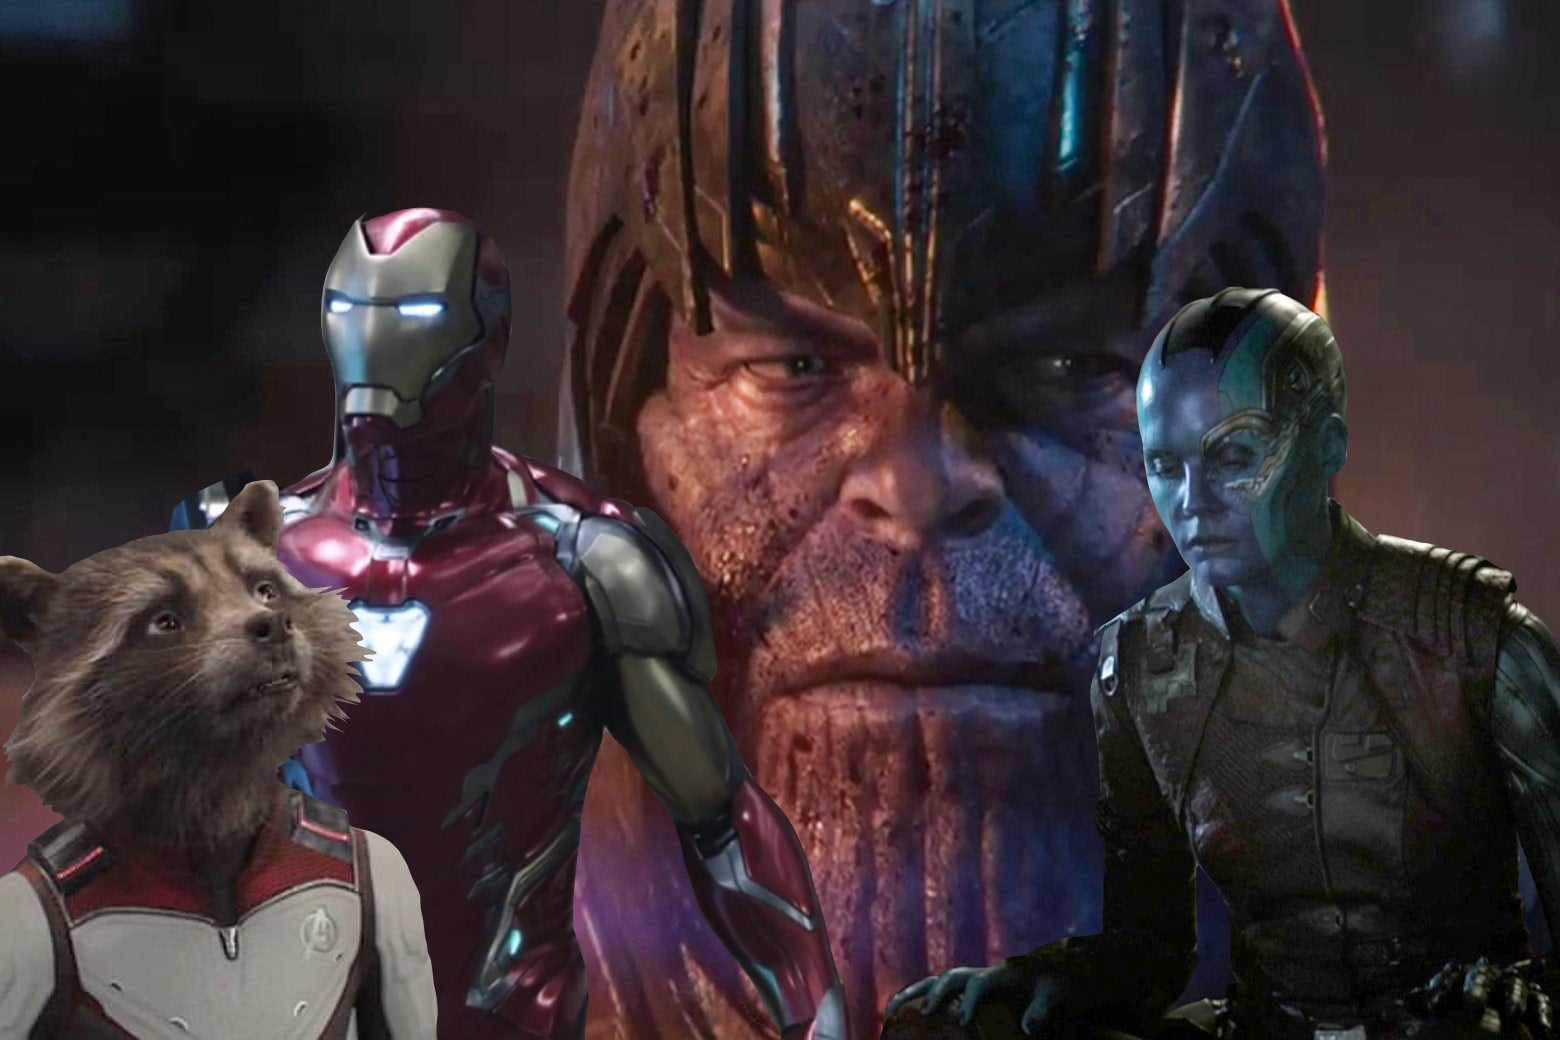 Collage of Avengers: Endgame characters like Thanos, Rocket Raccoon, Iron Man, and Nebula.